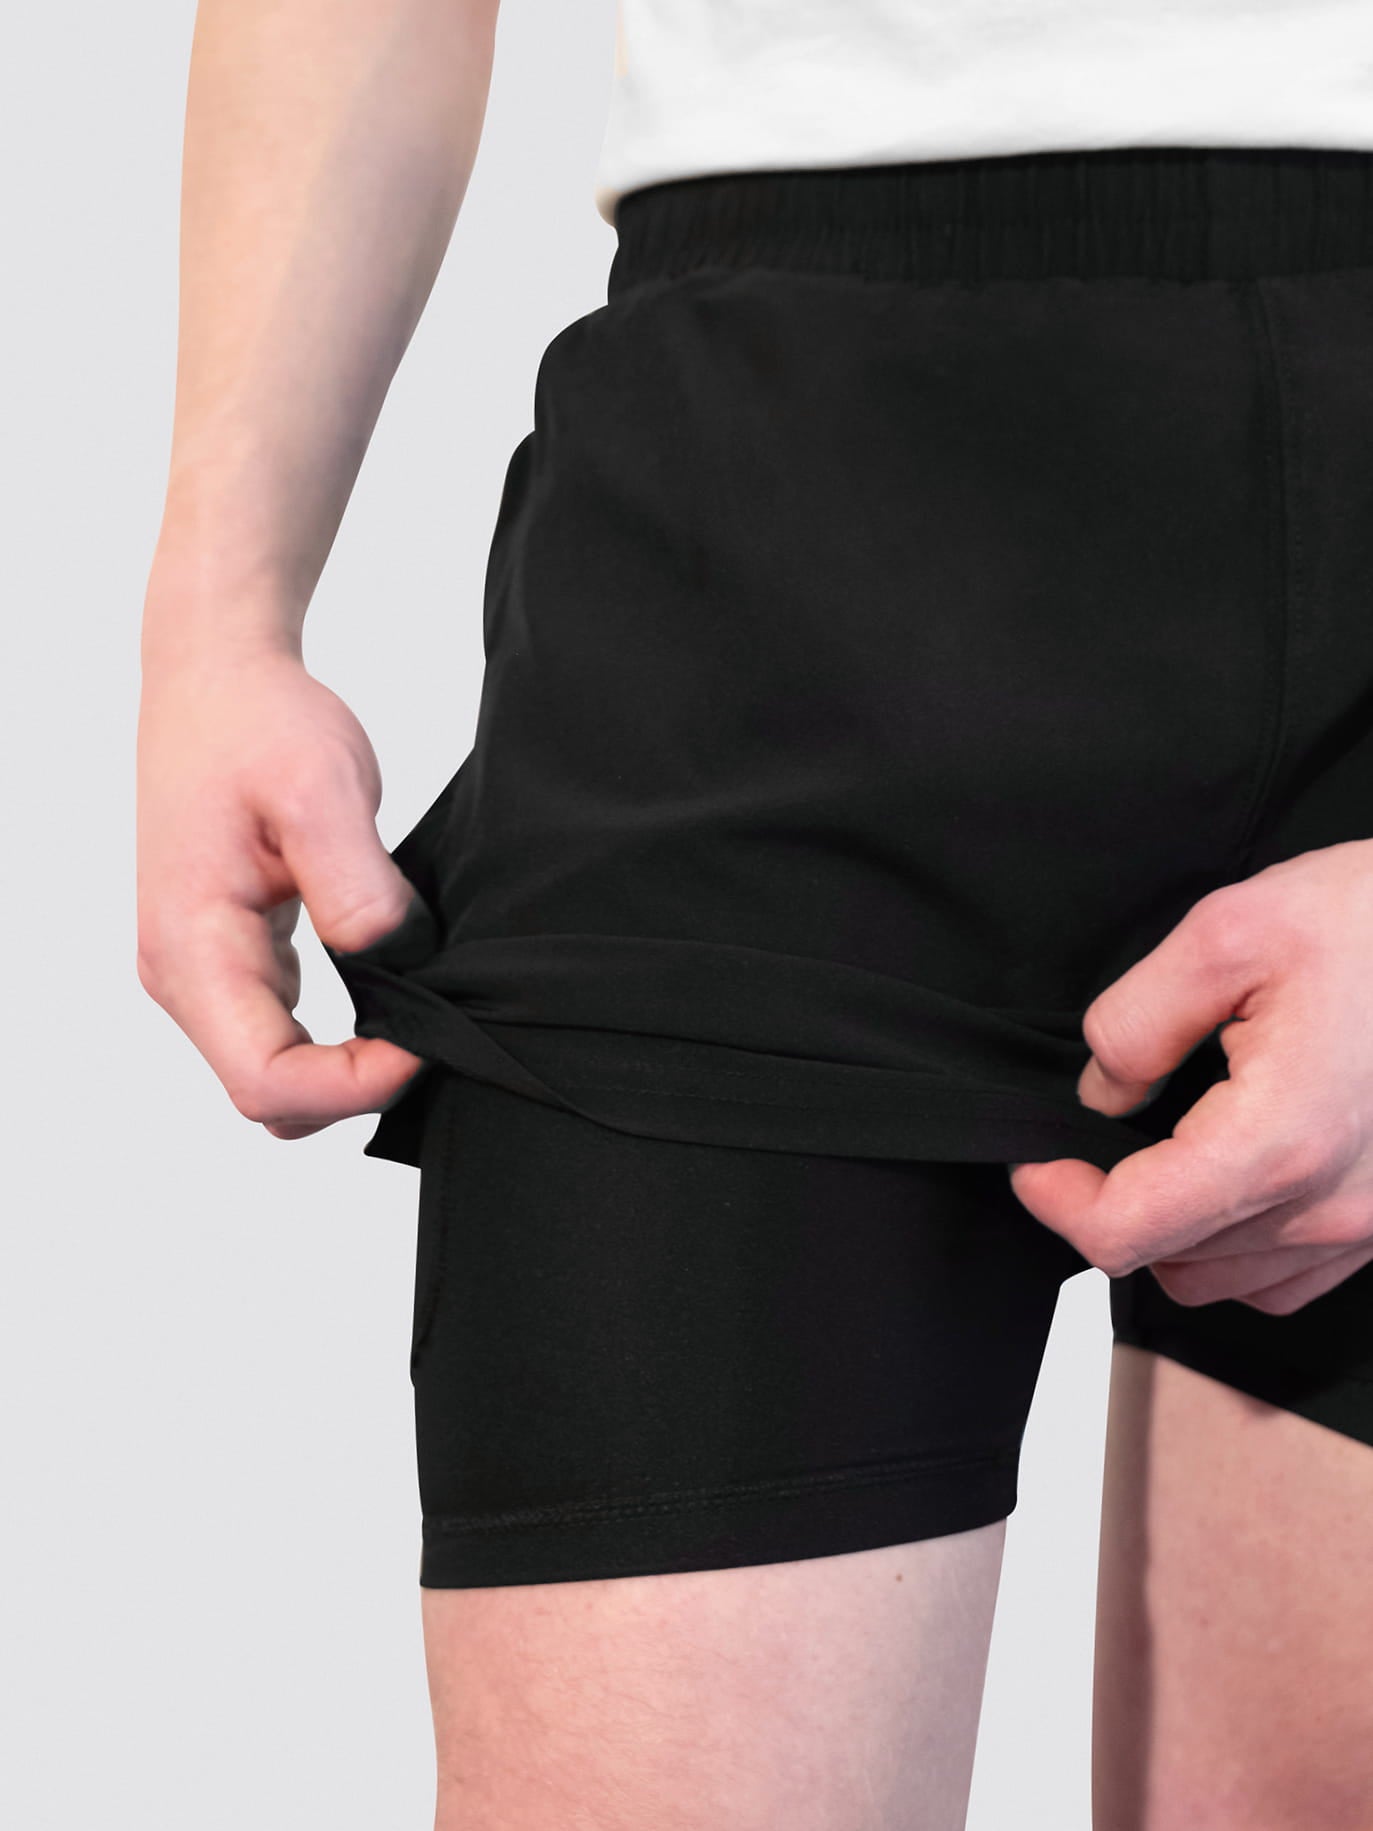 Keble College Oxford JCR Dual Layer Sports Shorts